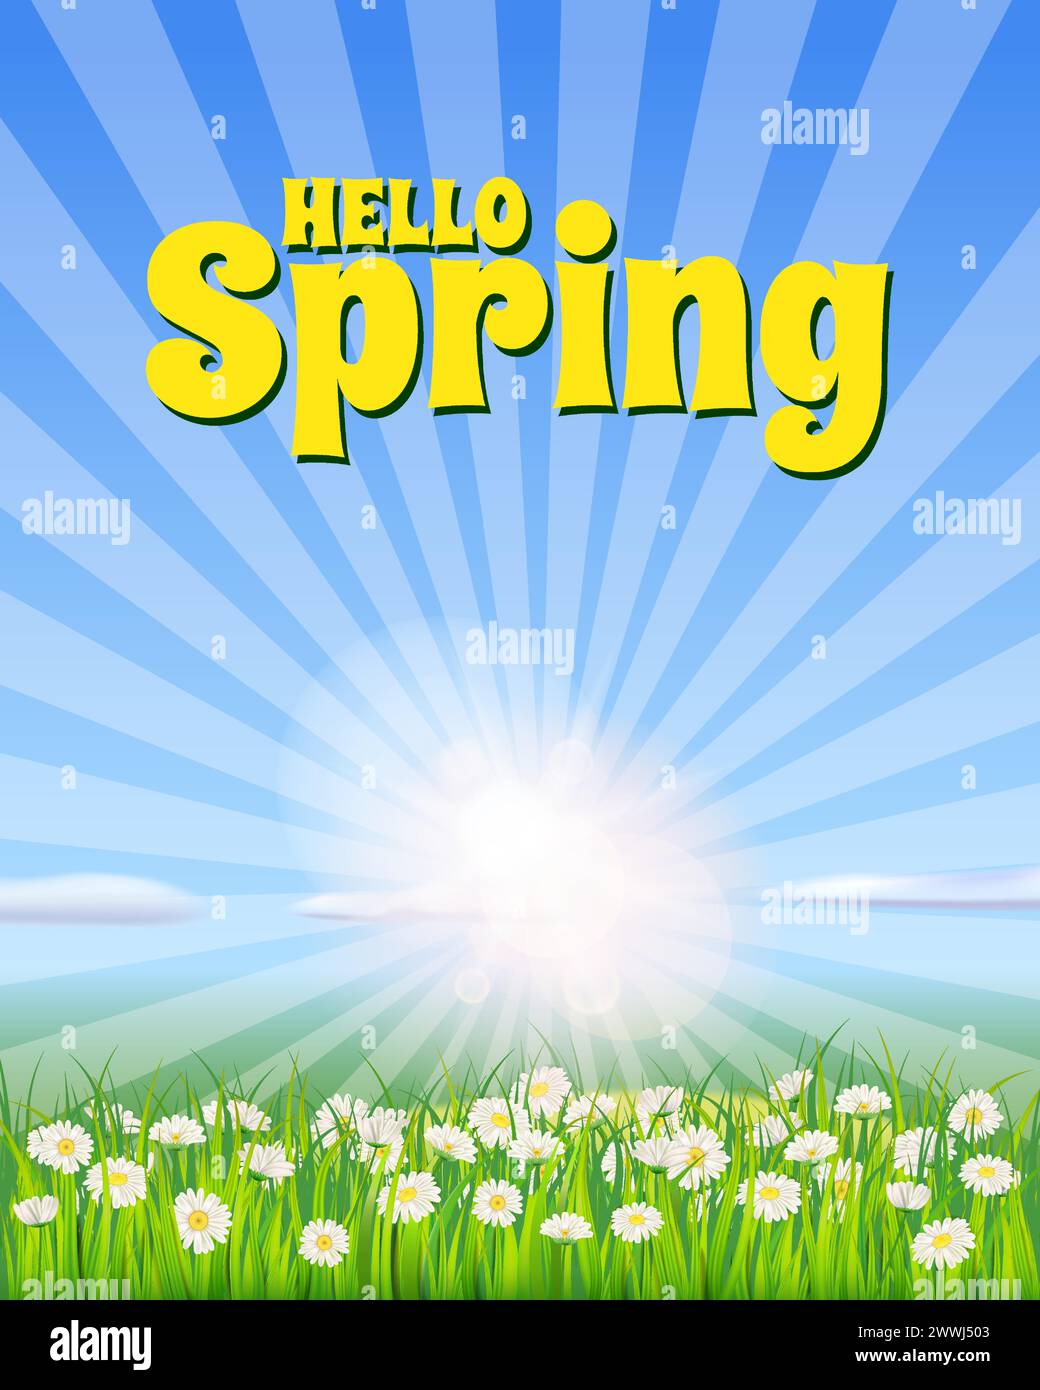 Hello spring landscape field green grass, daisy, dandelion flowers Stock Vector